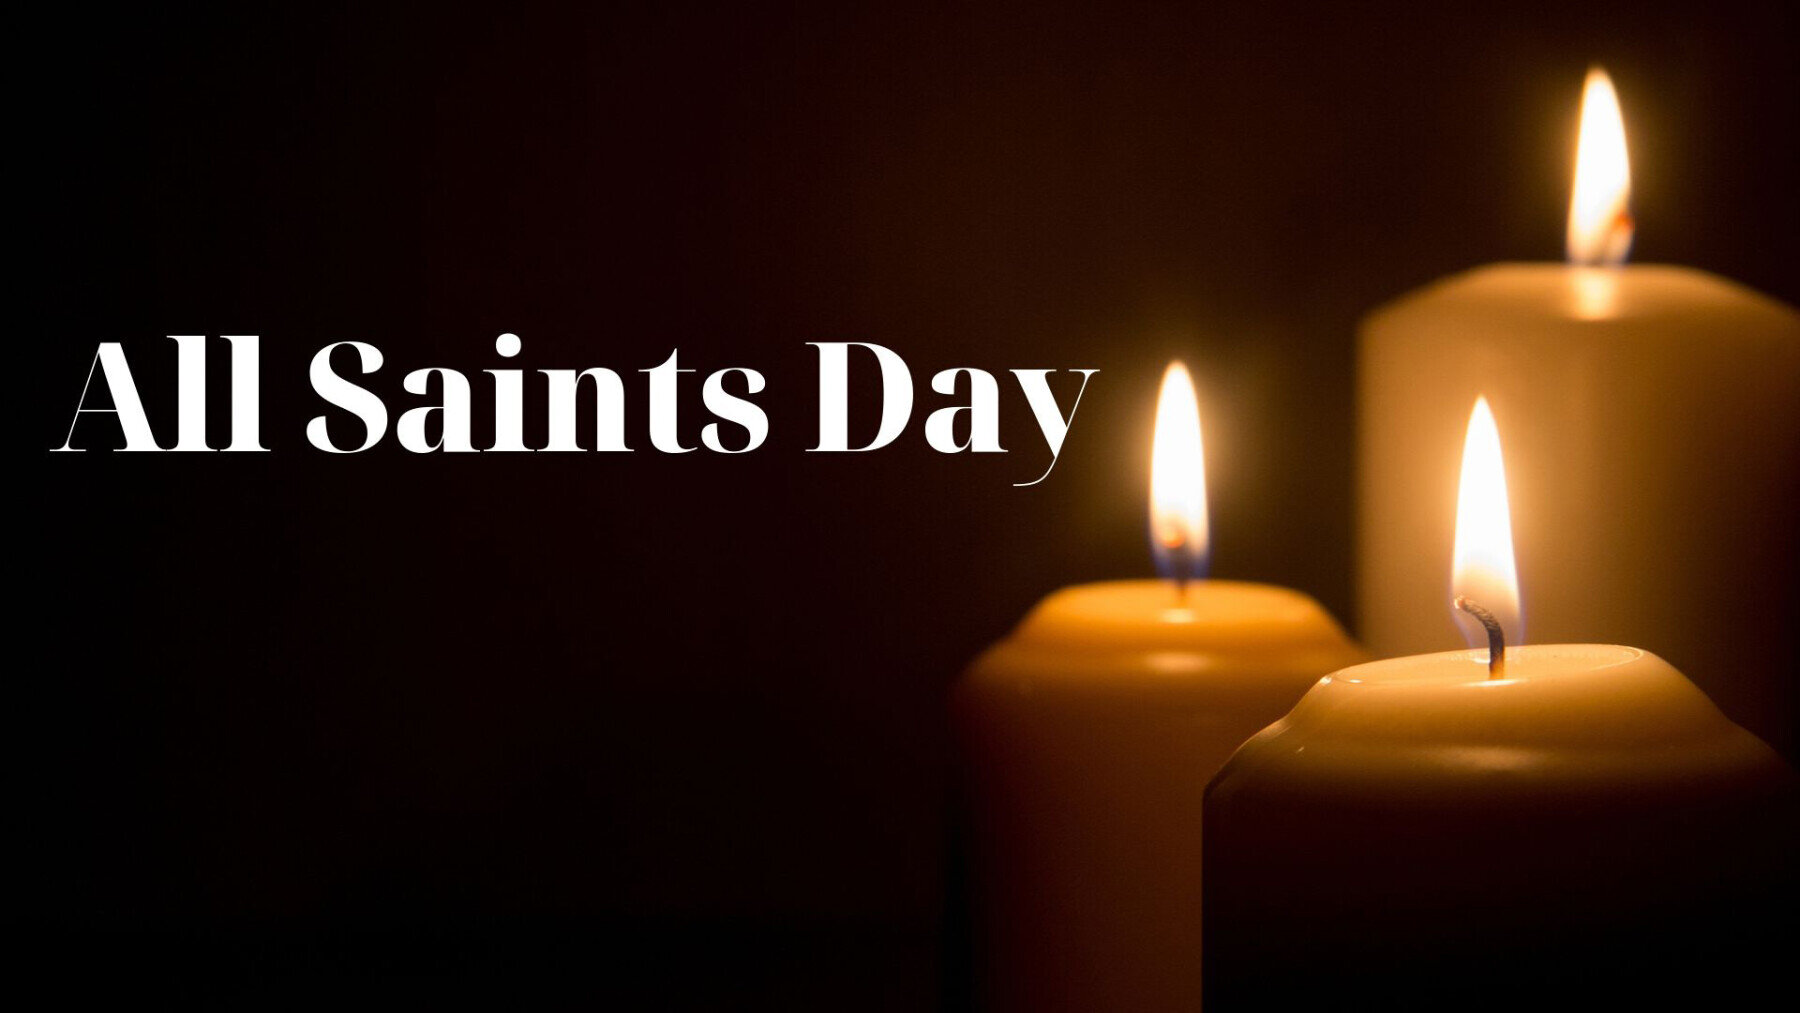 Happy All Saints Day